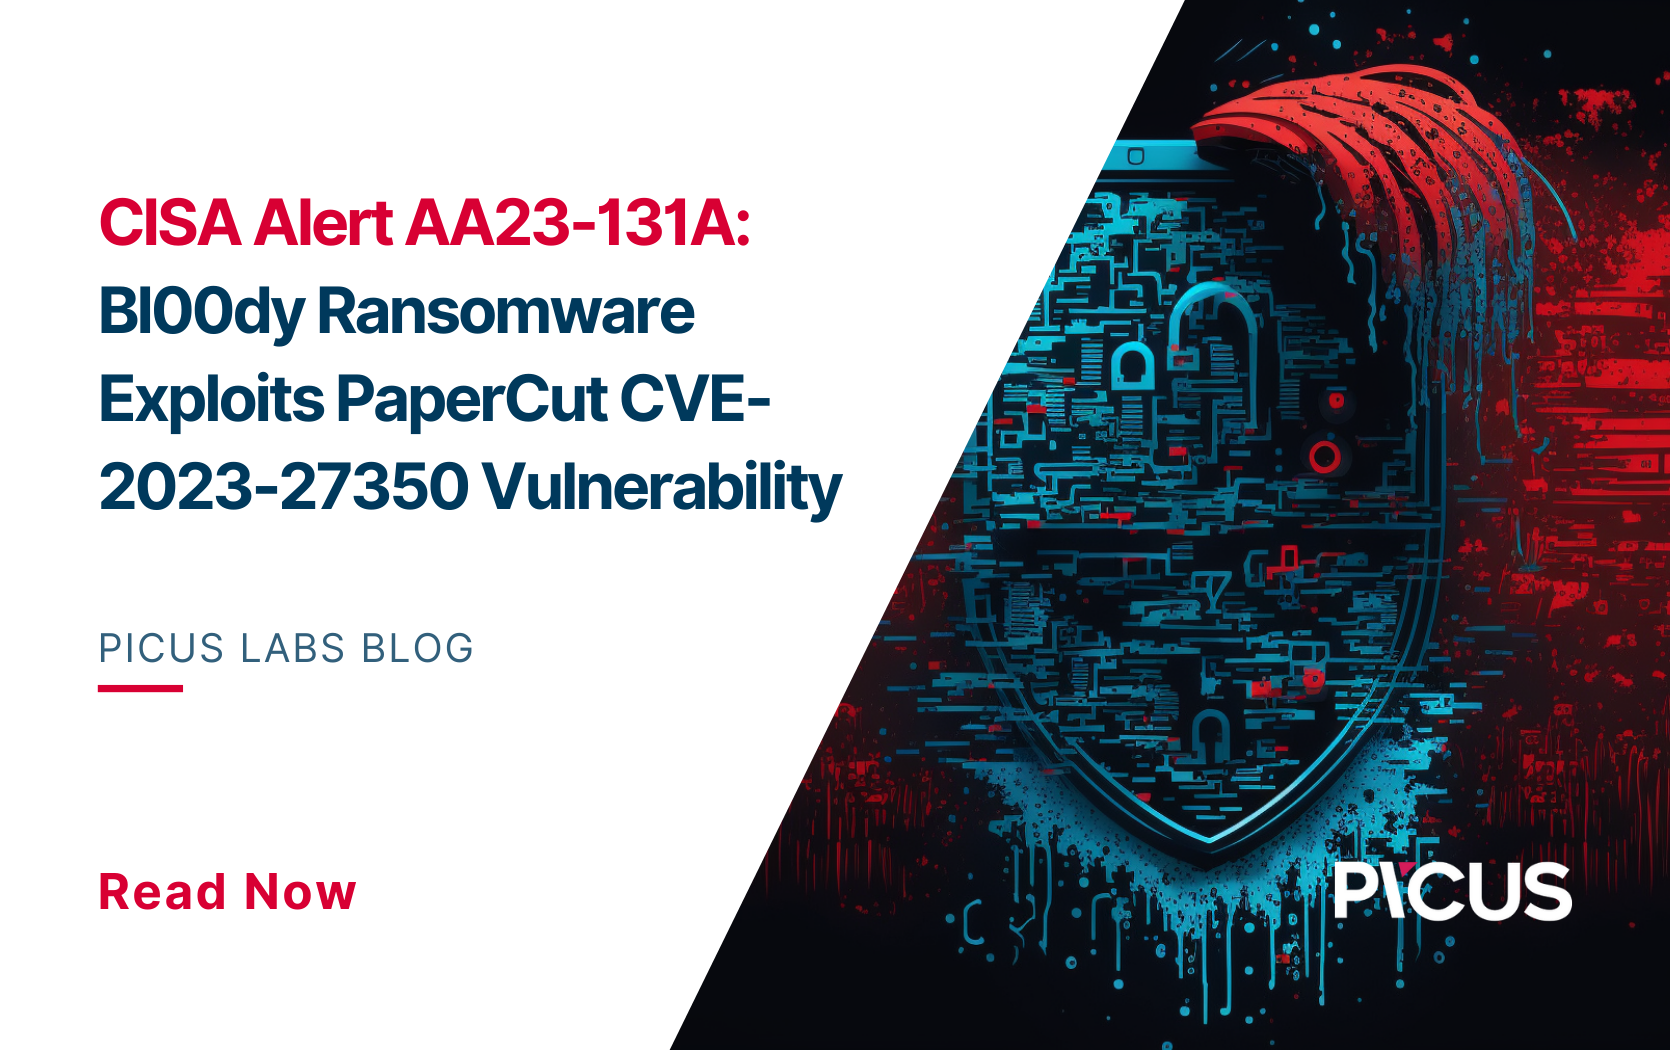 CISA Alert AA23-131A: Bl00dy Ransomware Exploits PaperCut CVE-2023-27350 Vulnerability